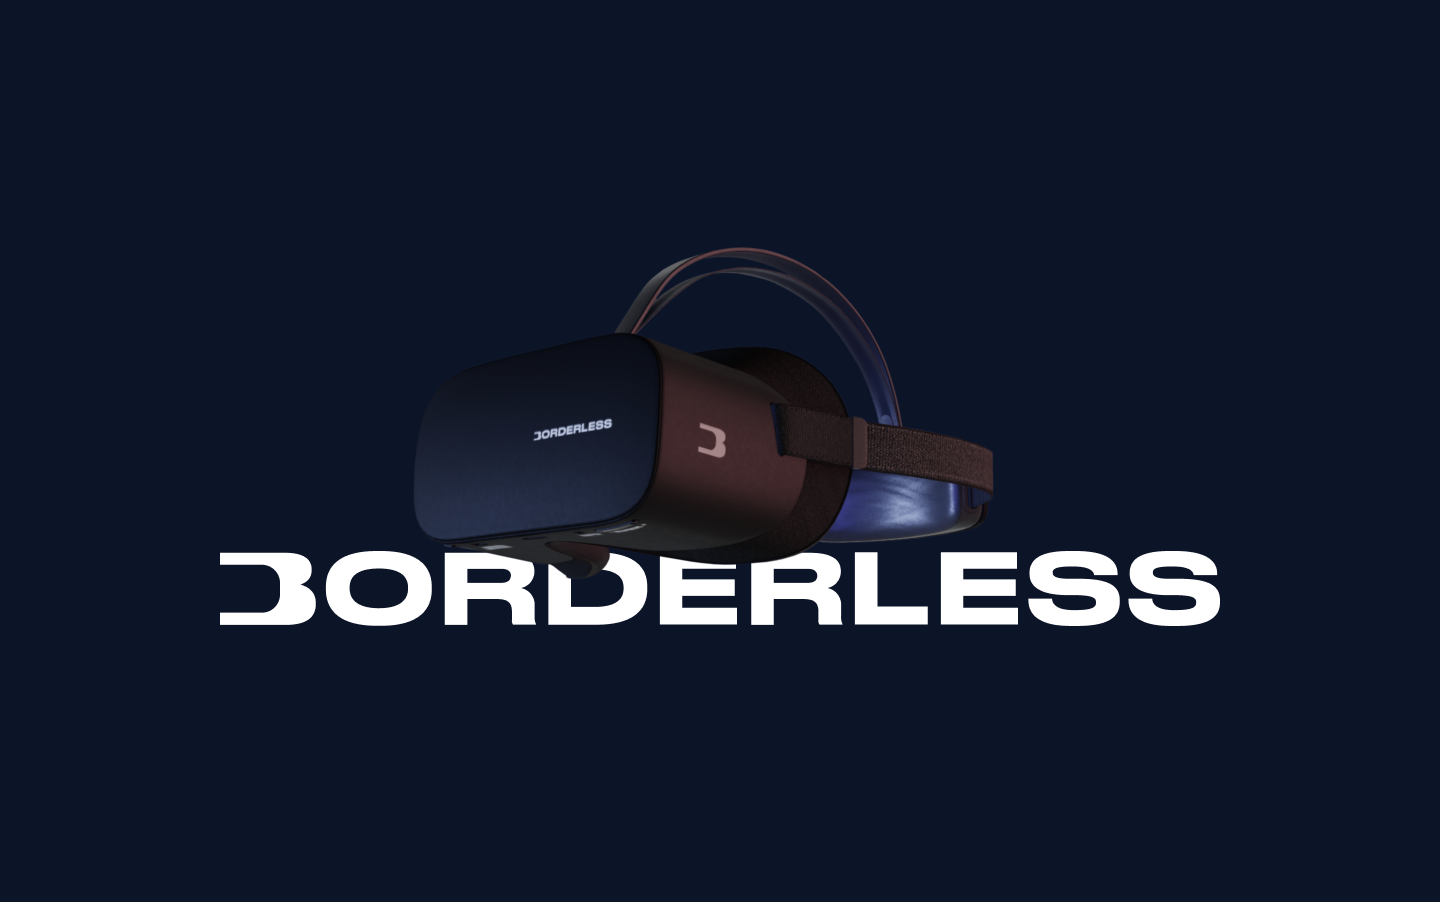 Borderless Experiences - A Brand New XR Platform